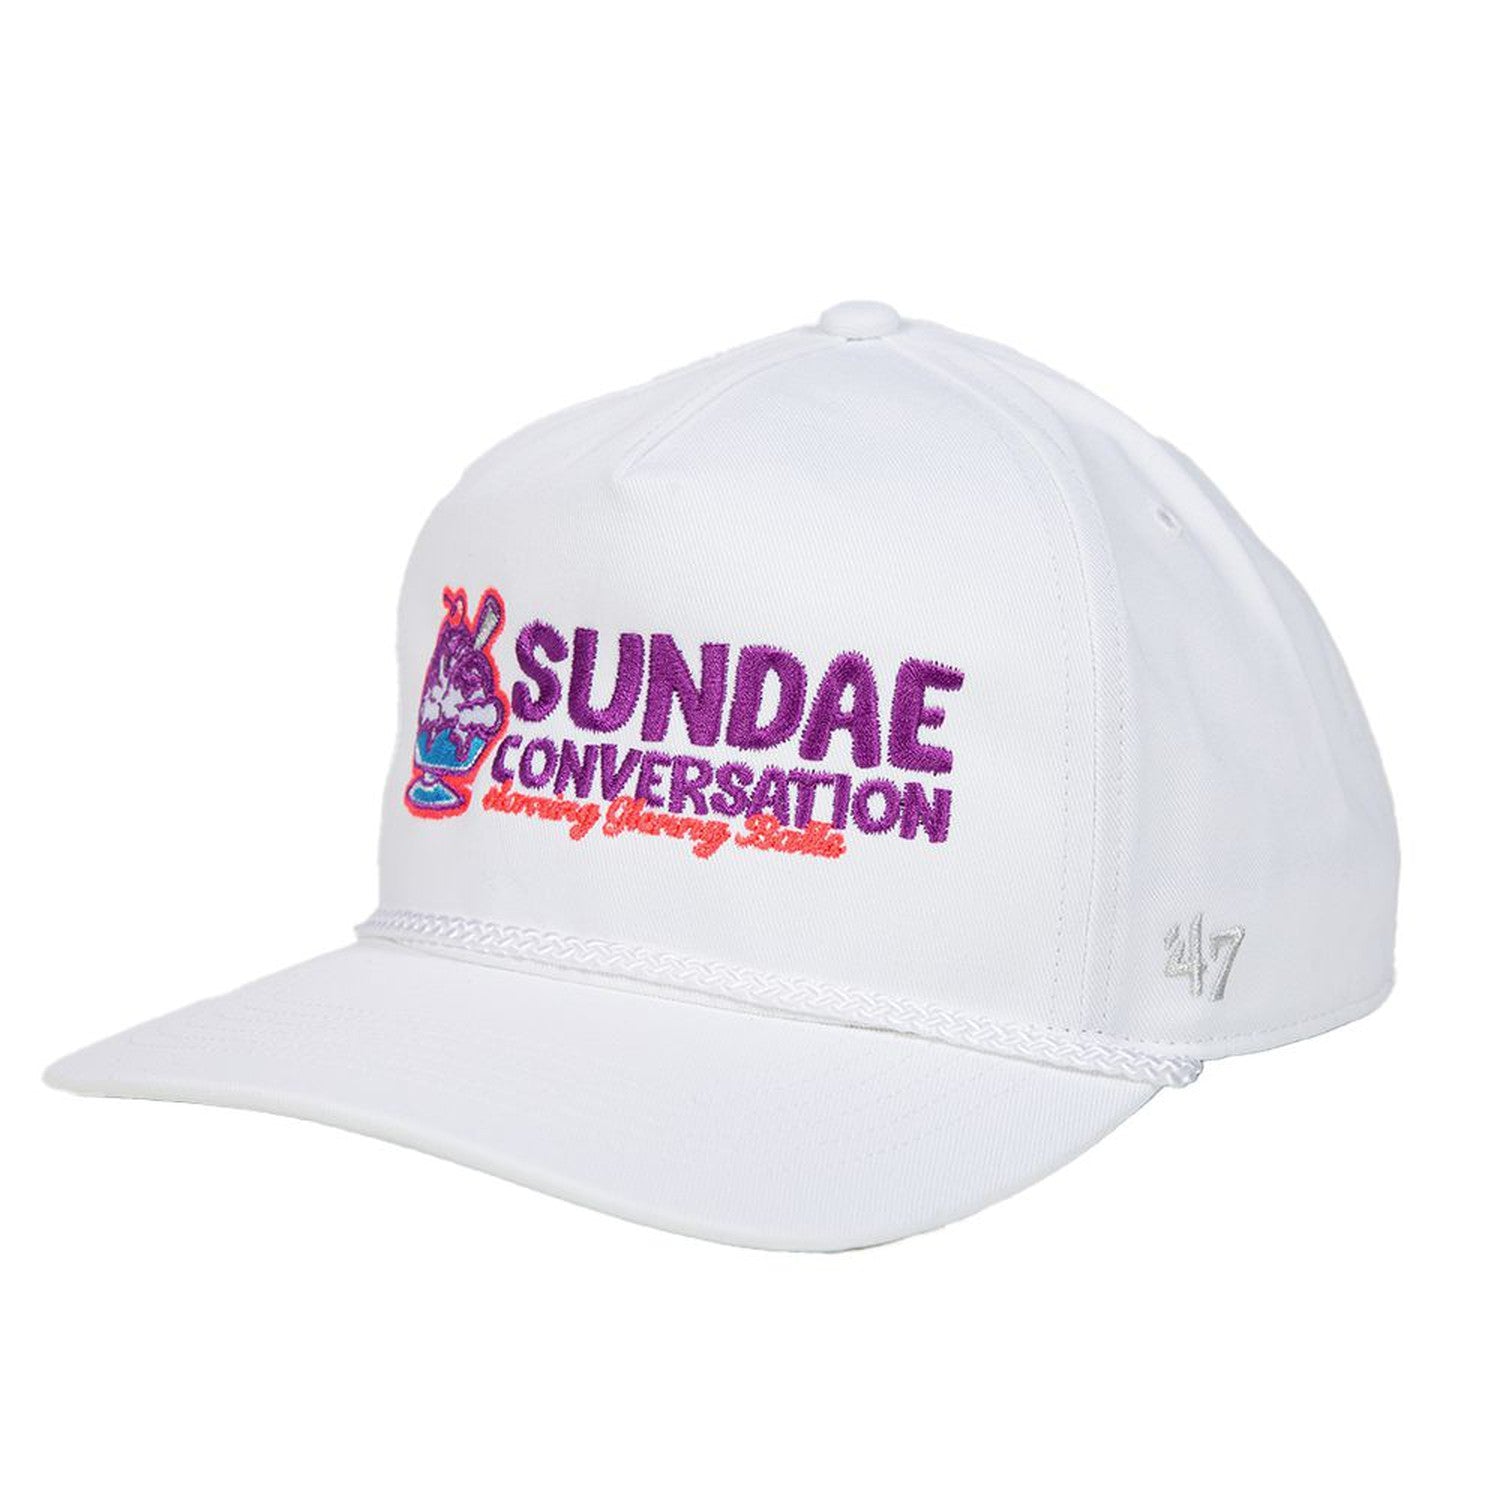 Sundae Conversation x '47 HITCH Snapback Hat